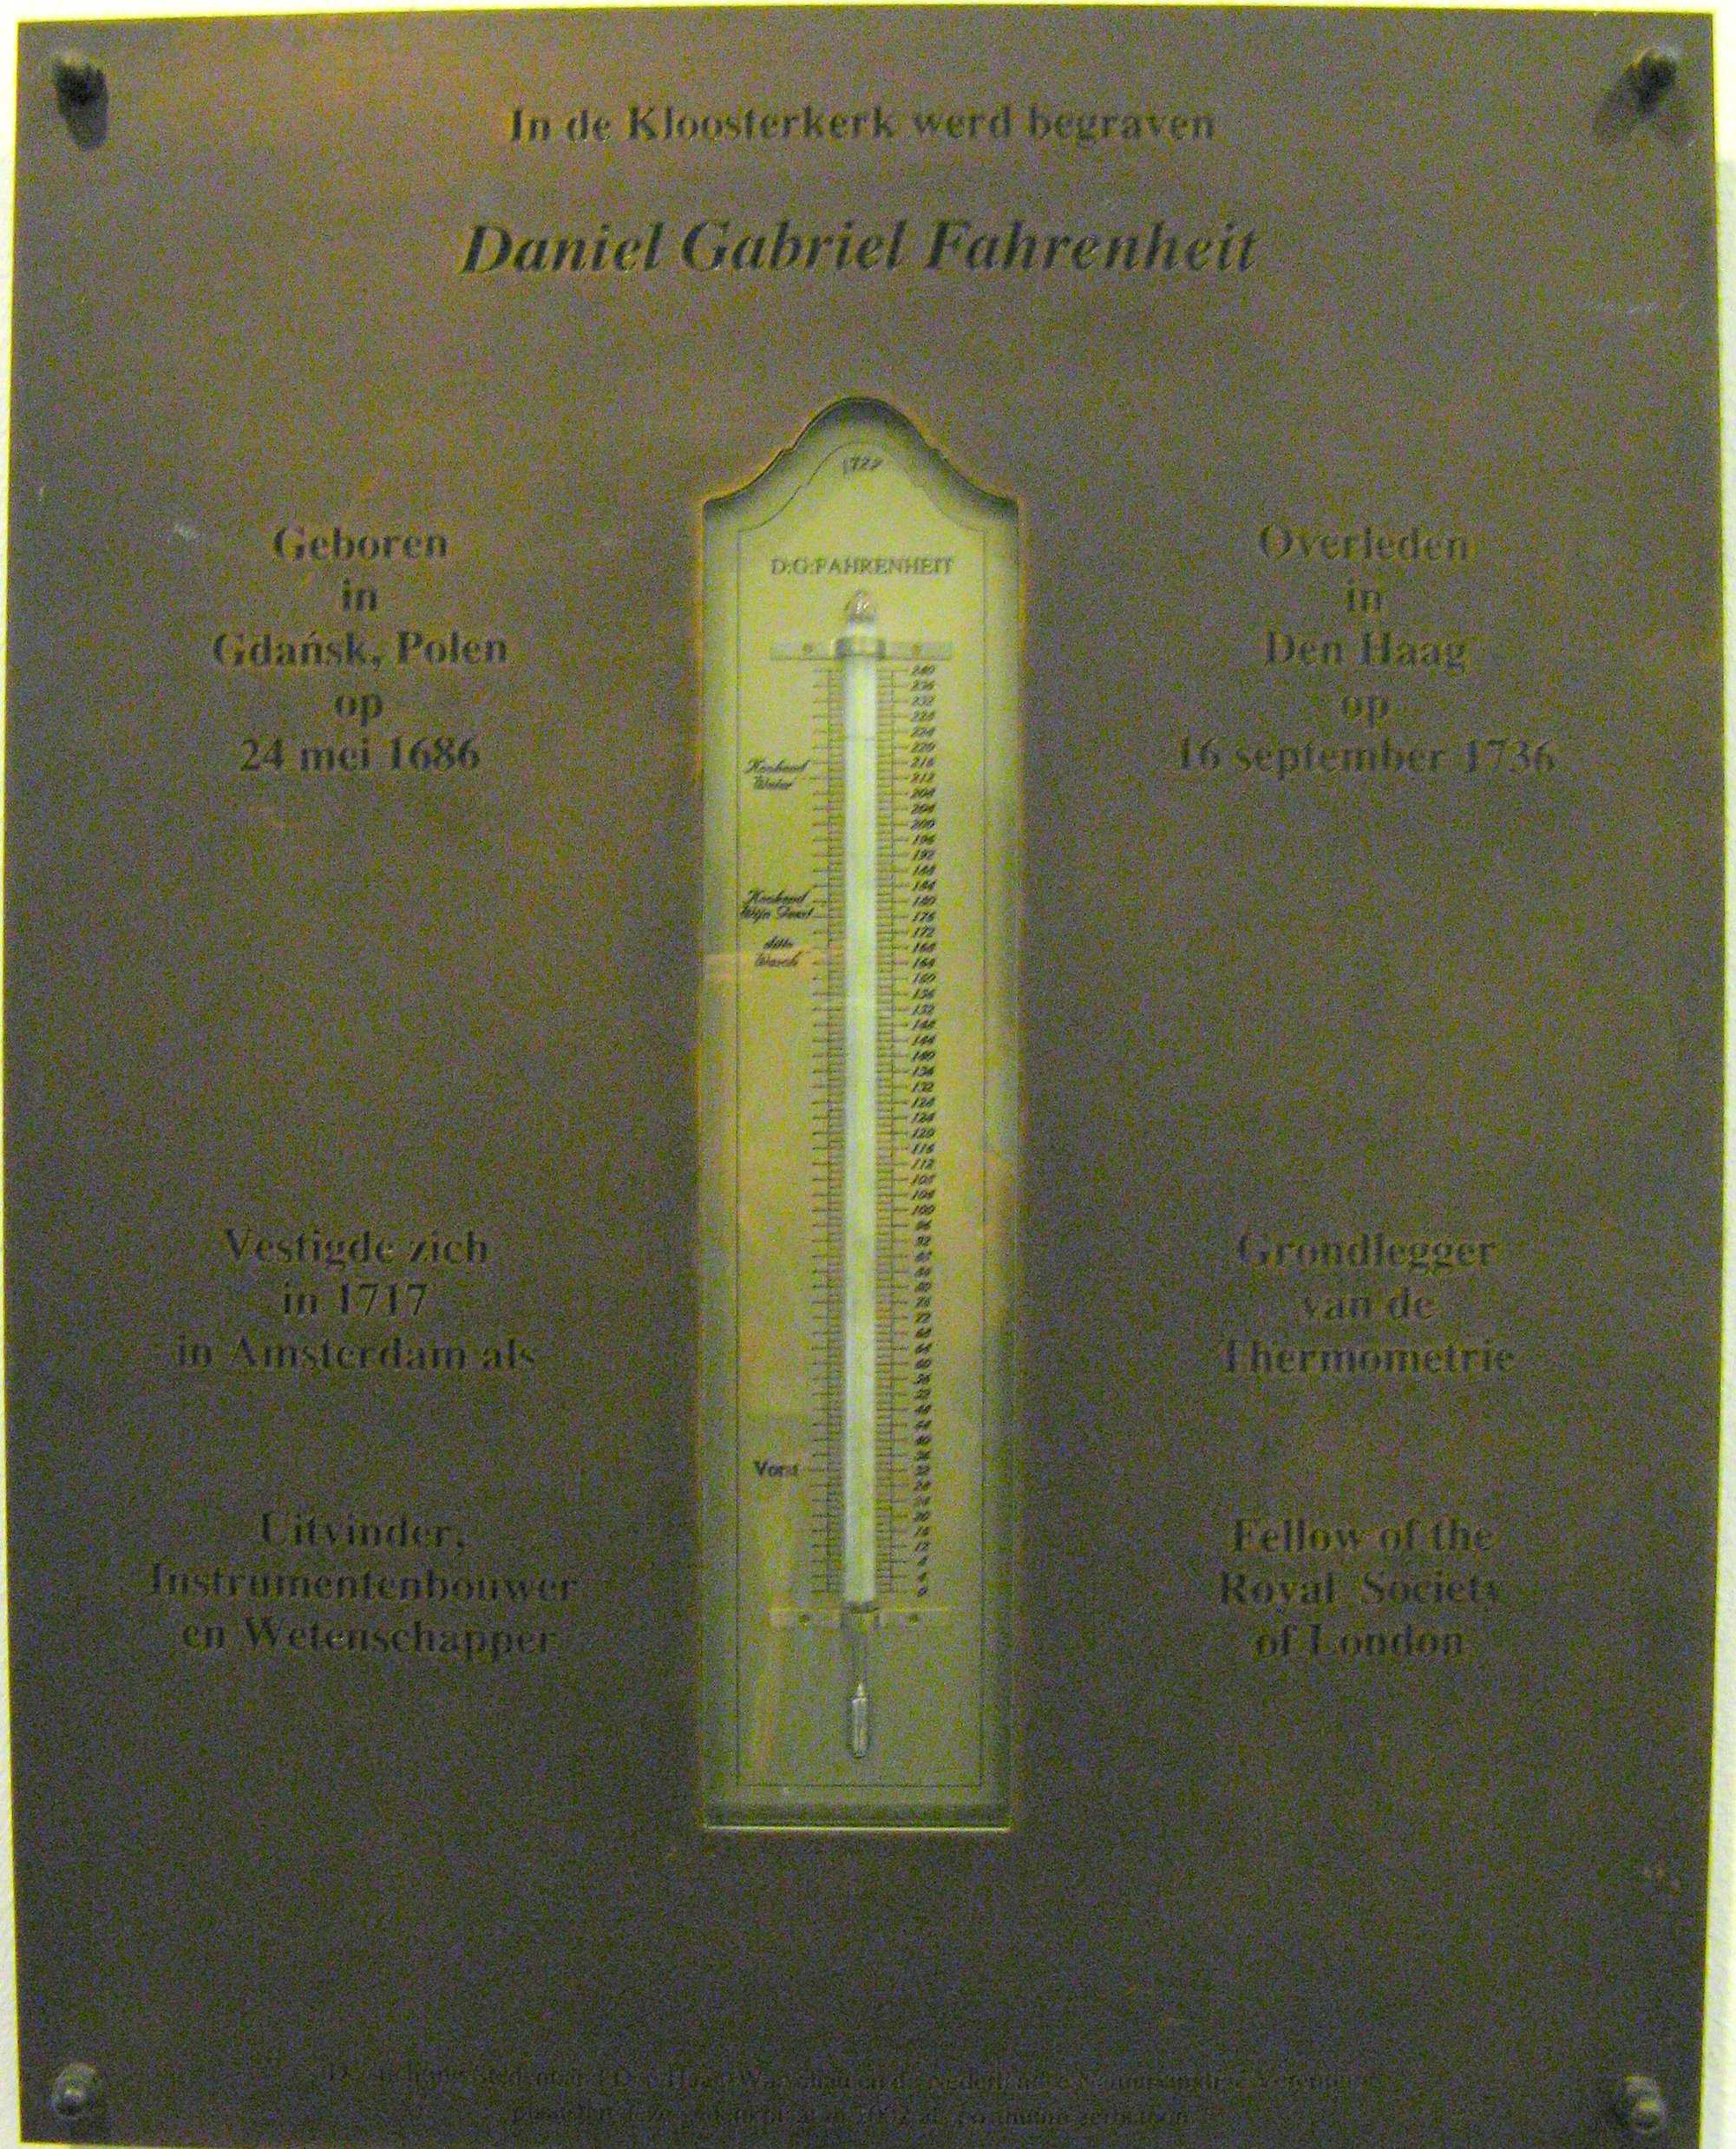 Termometro de Gabriel Fahrenheit